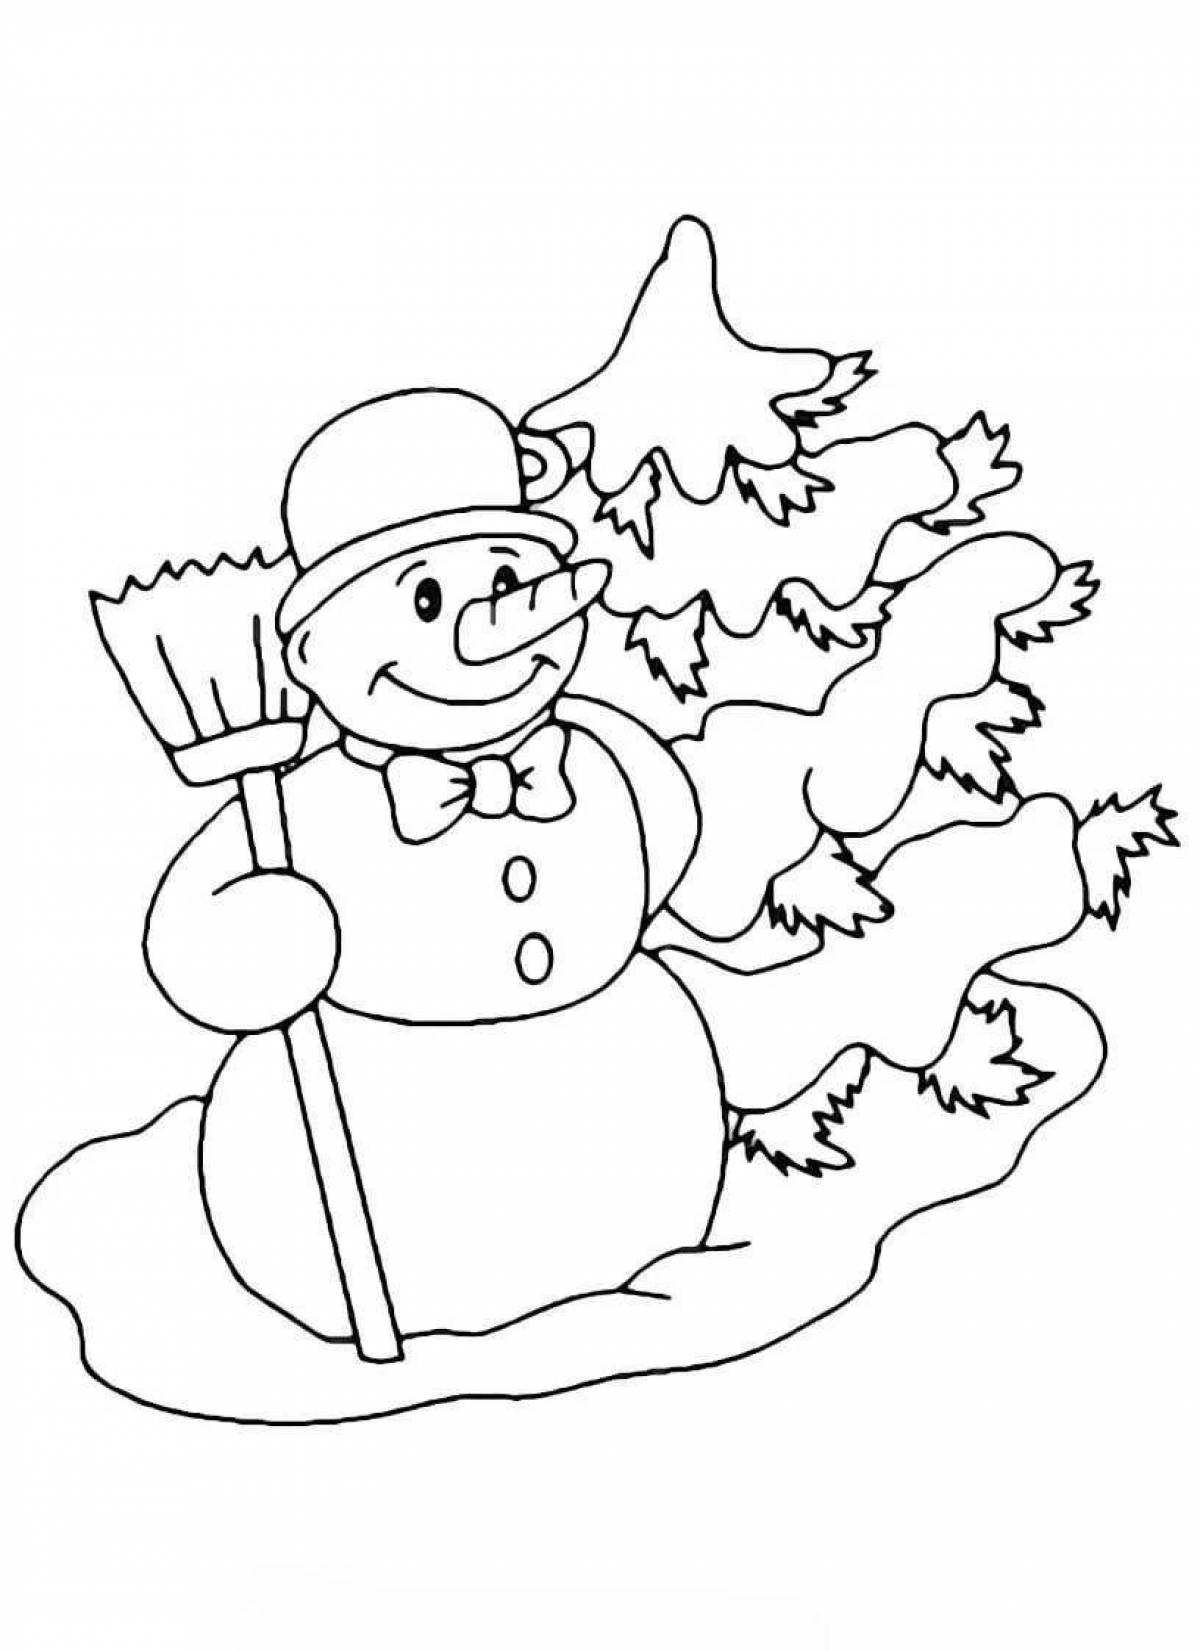 Забавная раскраска снеговик с метлой